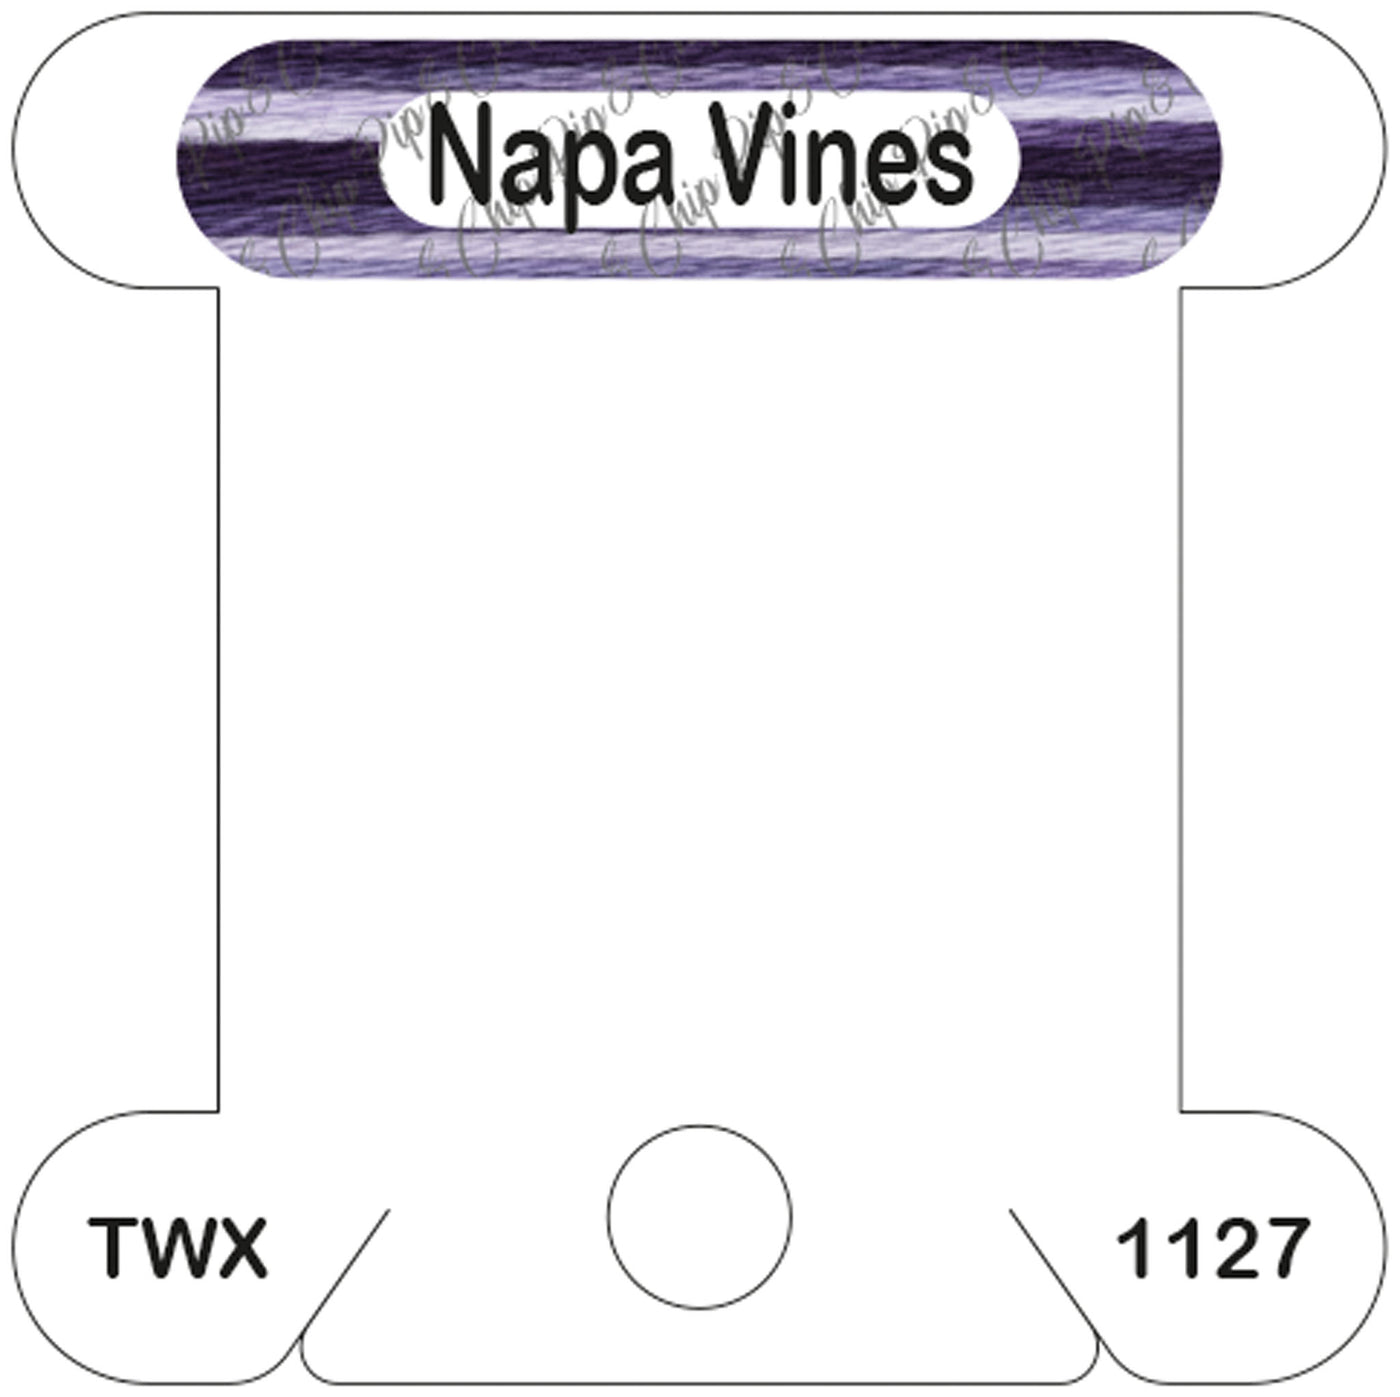 ThreadworX Napa Vines acrylic bobbin